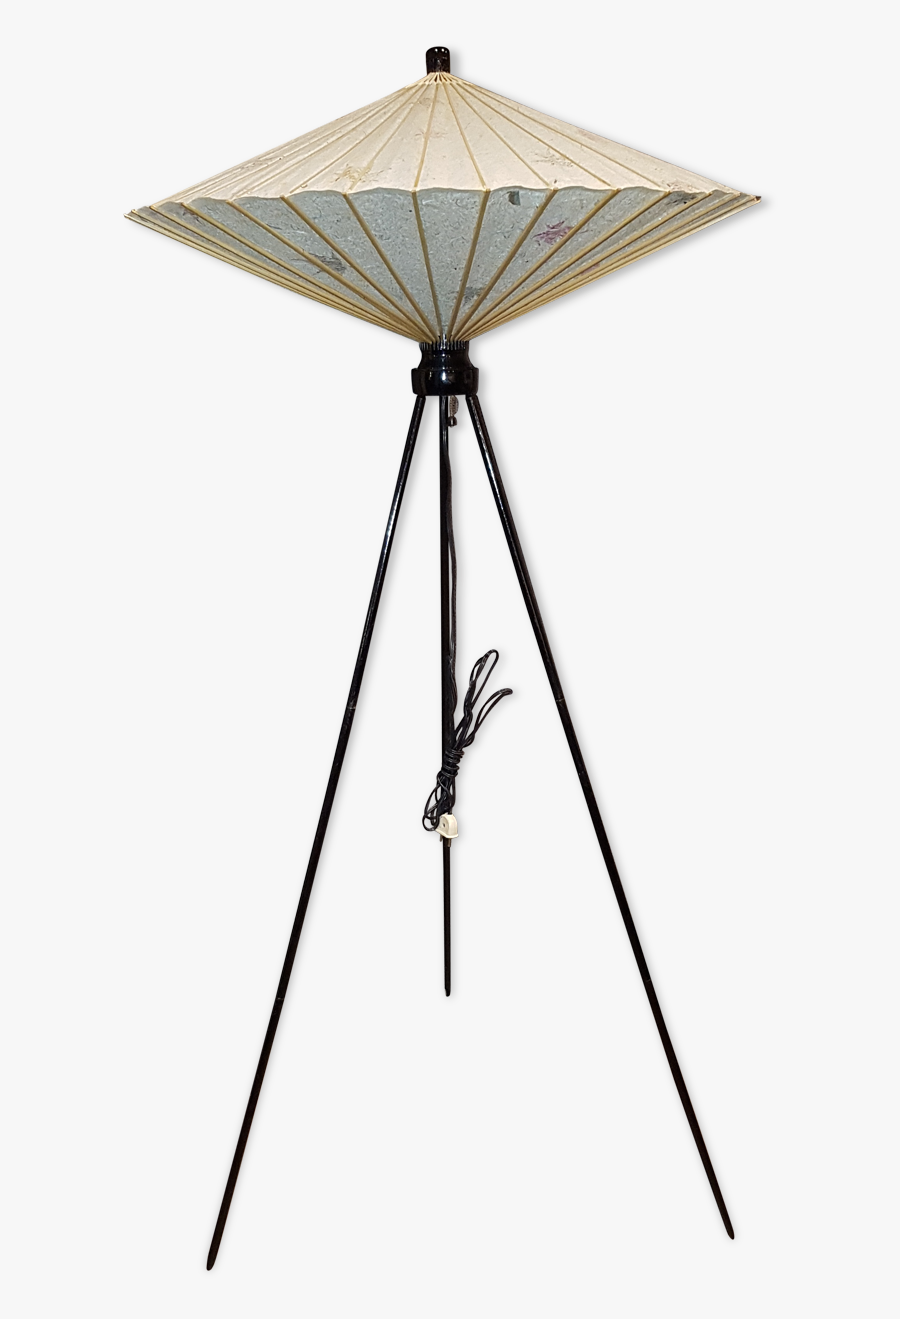 Transparent Japanese Umbrella Png, Transparent Clipart